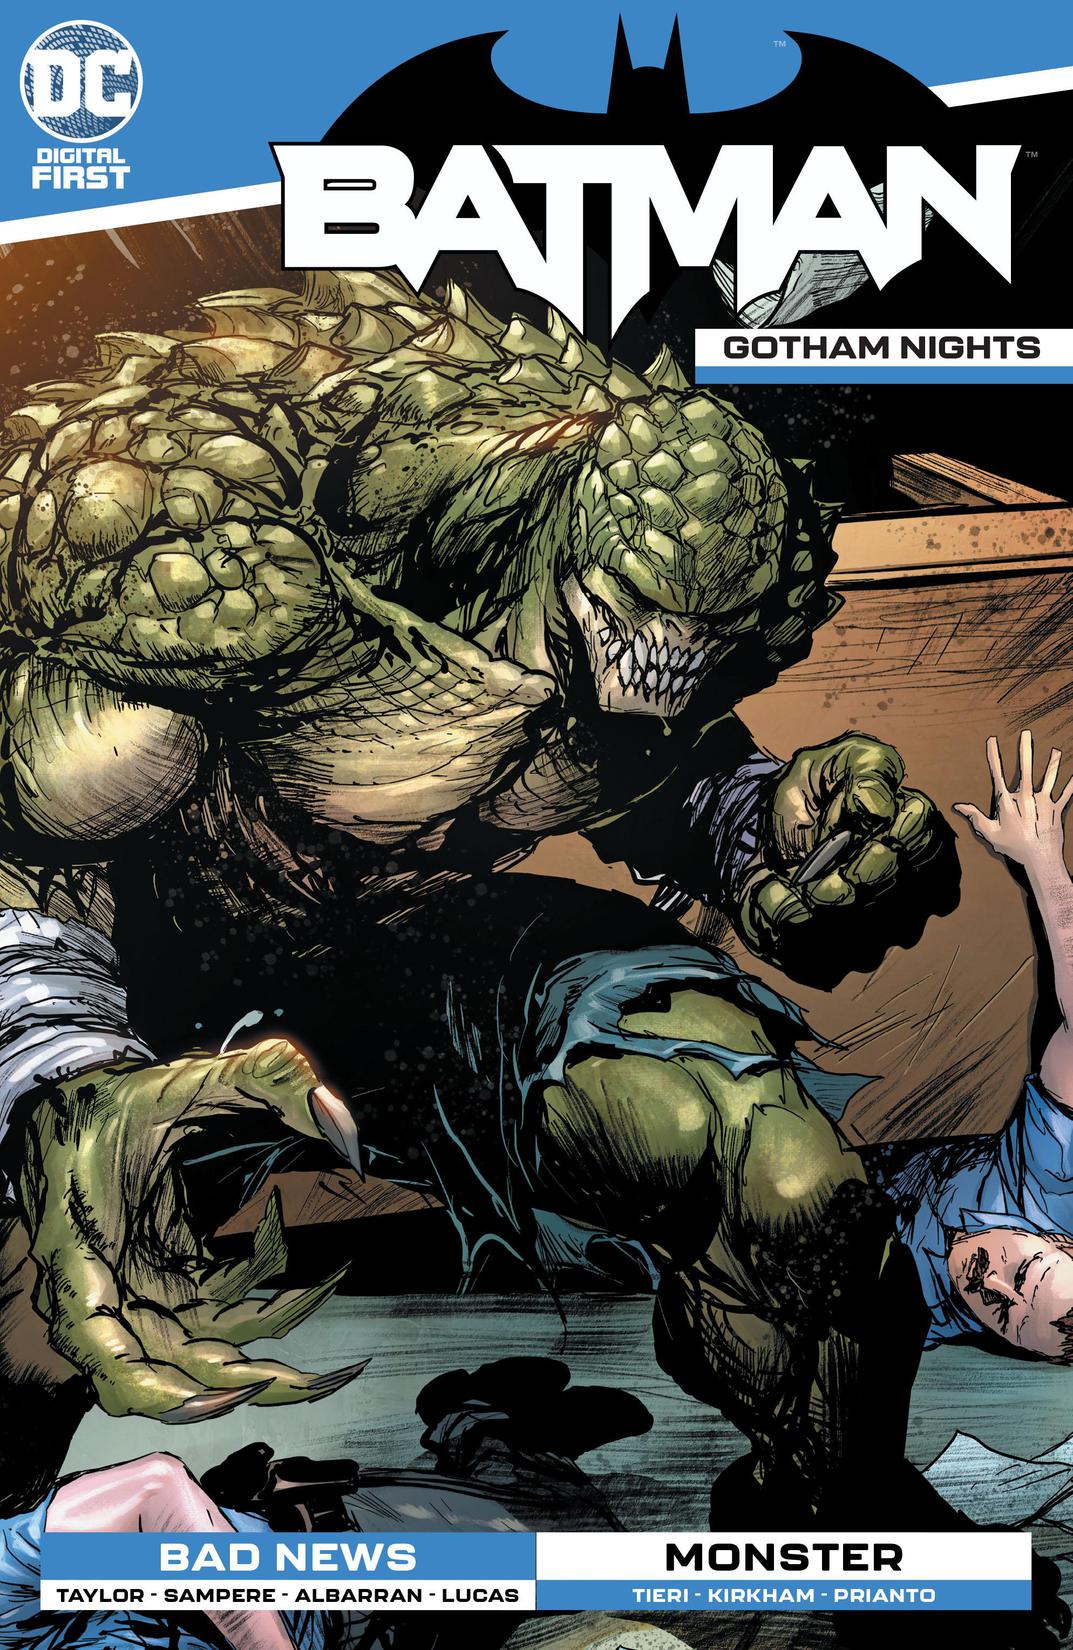 Batman: Gotham Nights #14 preview images